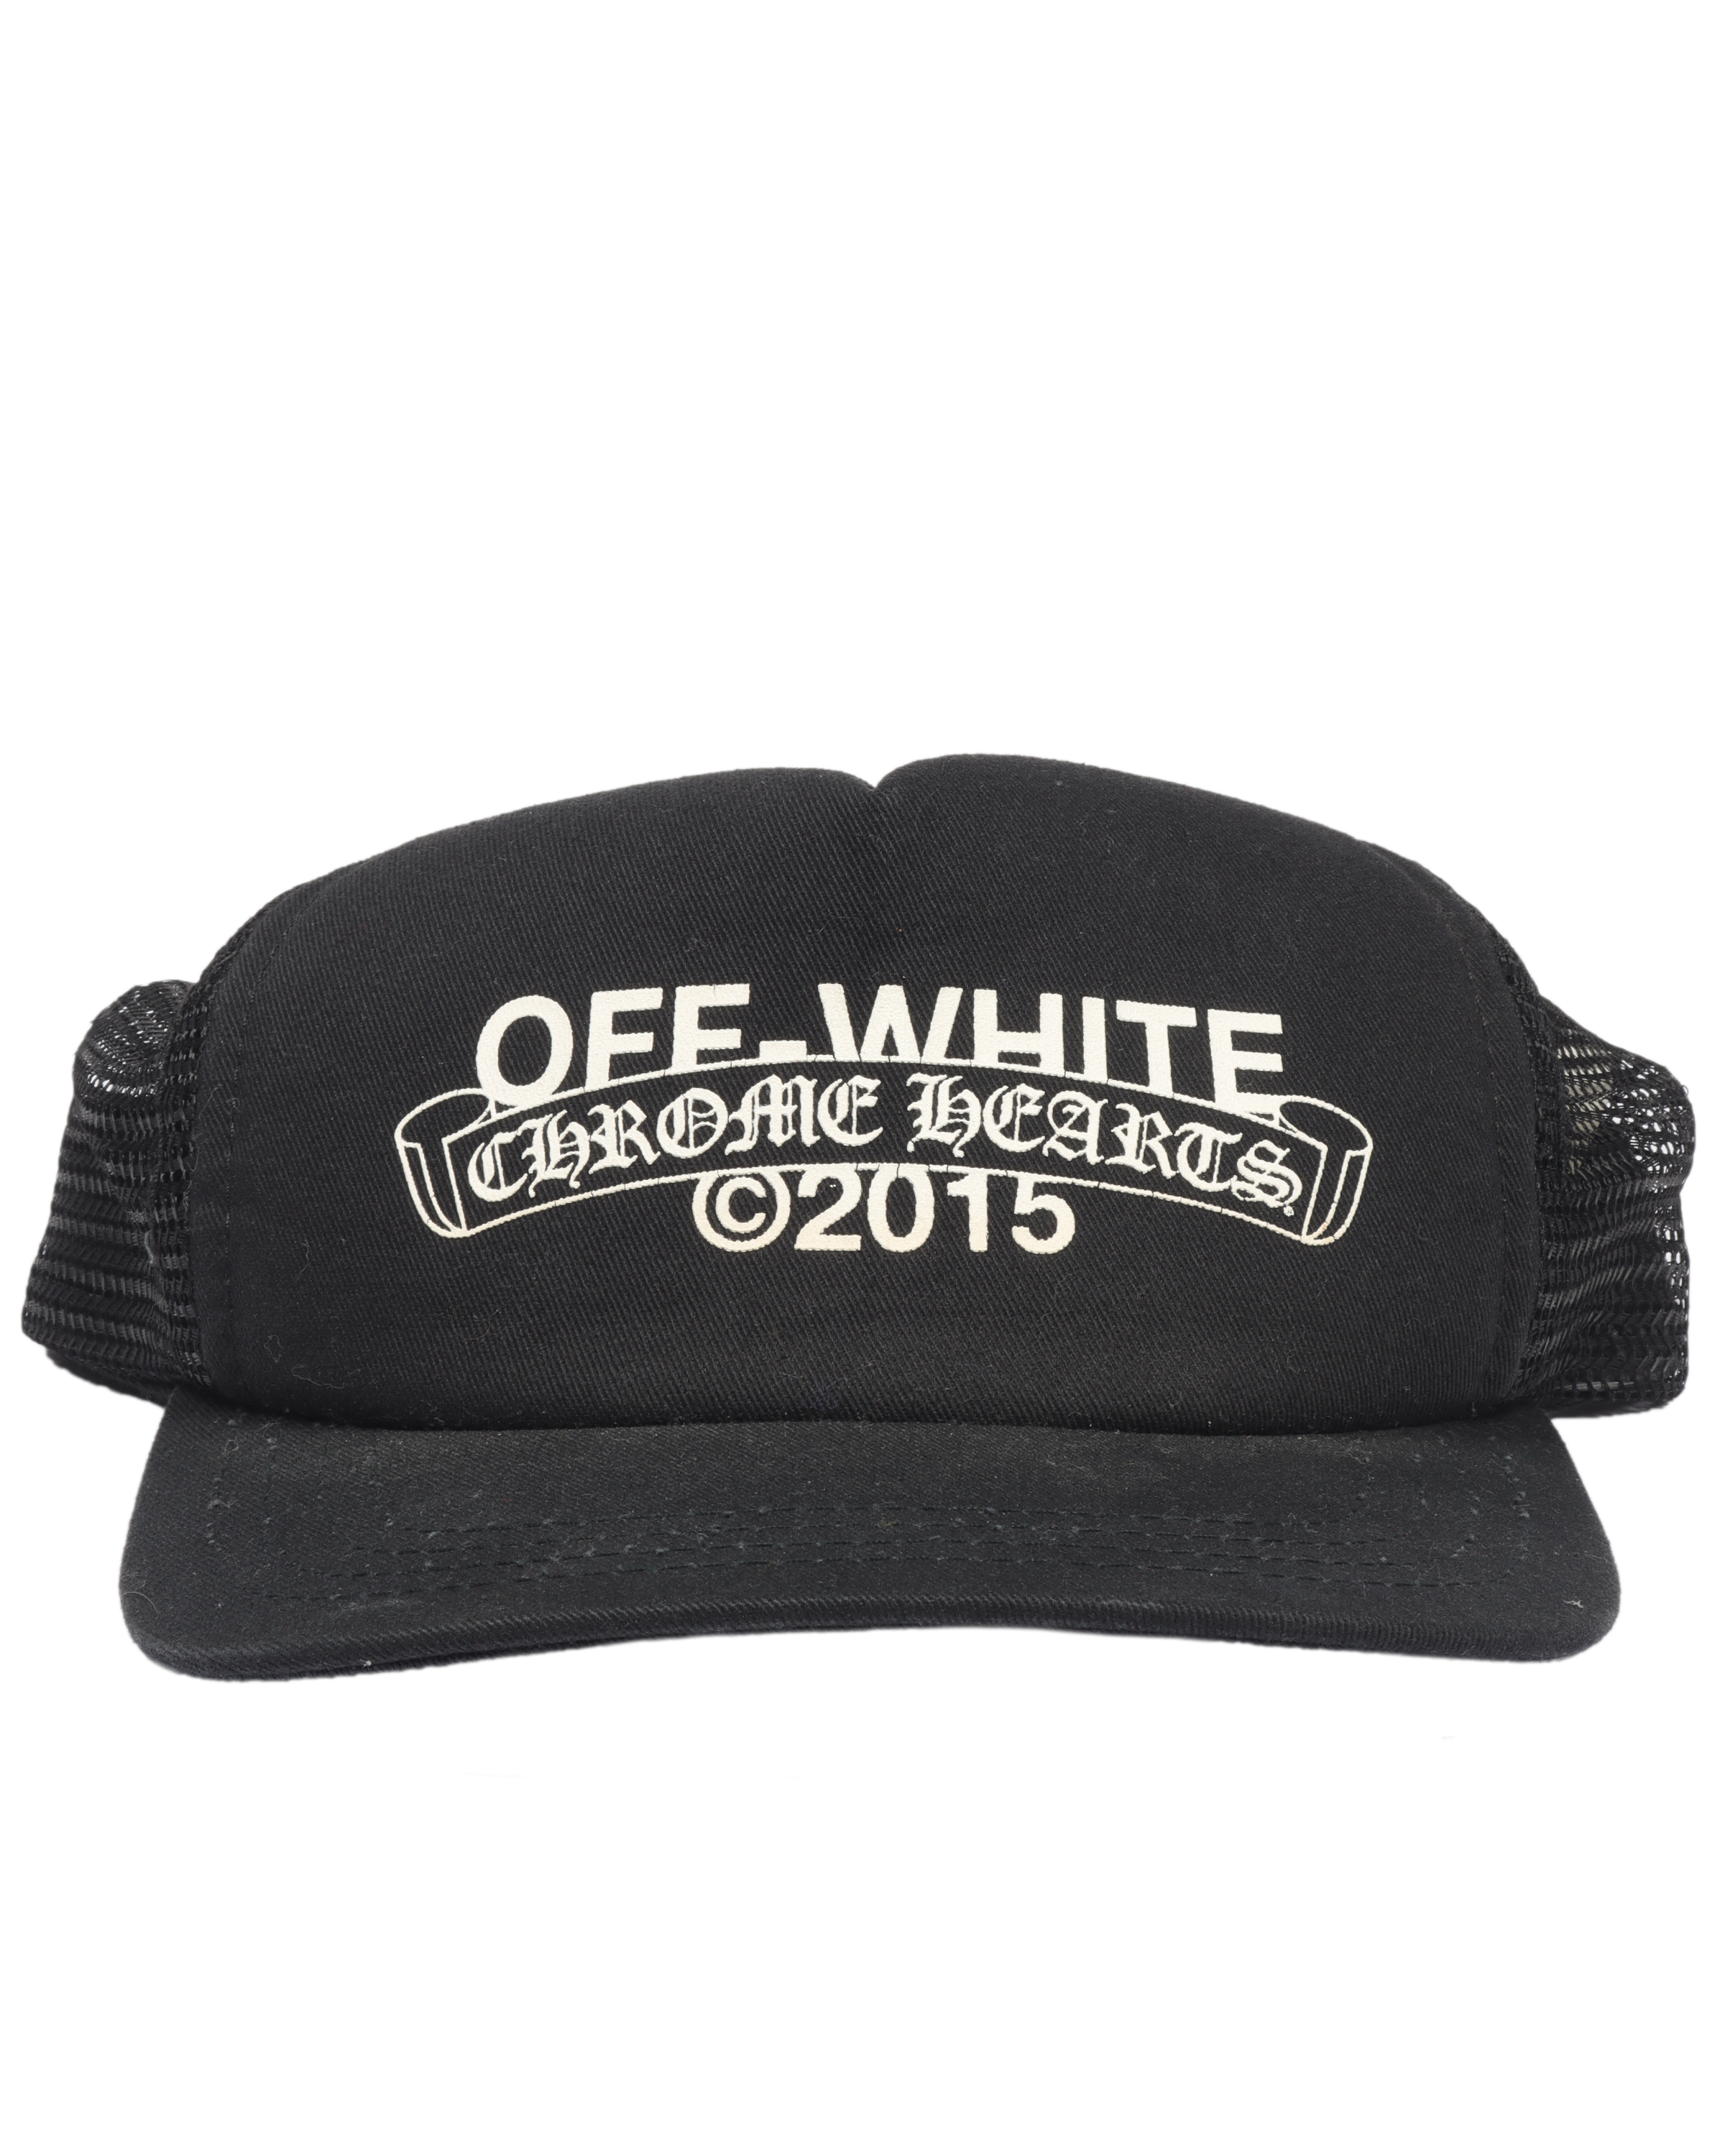 Off-White Collaboration Trucker Hat (2015)